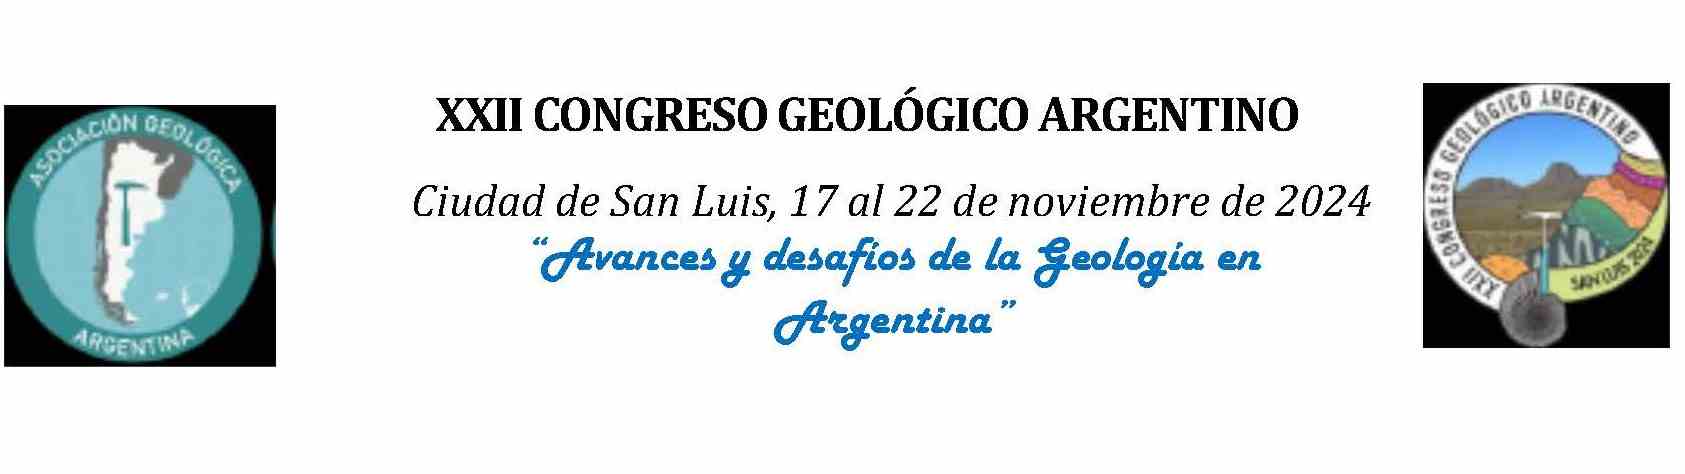 Imagen del evento XXII CONGRESO GEOLÓGICO ARGENTINO